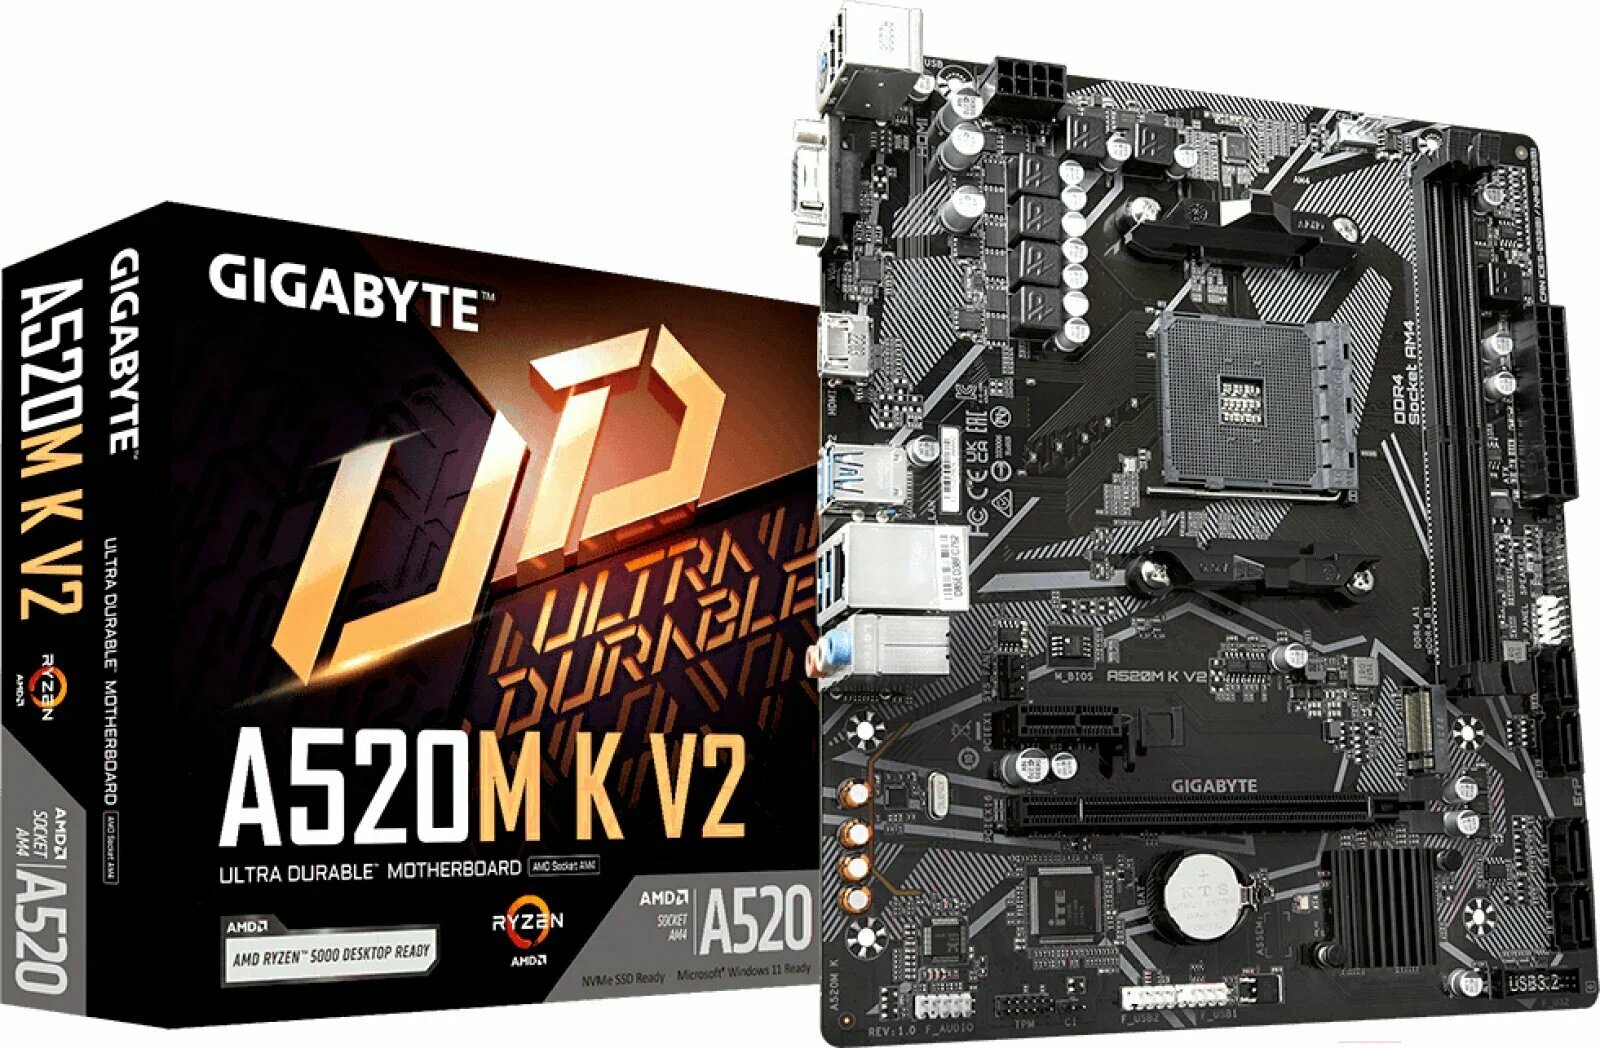 Материнская плата Gigabyte A520M K V2 (rev. 1.1) под игровой процессор Ryzen 5, сокет AM4, DDR4, PCI-E 3.0, VGA, HDMI, HDA 7.1, Retail